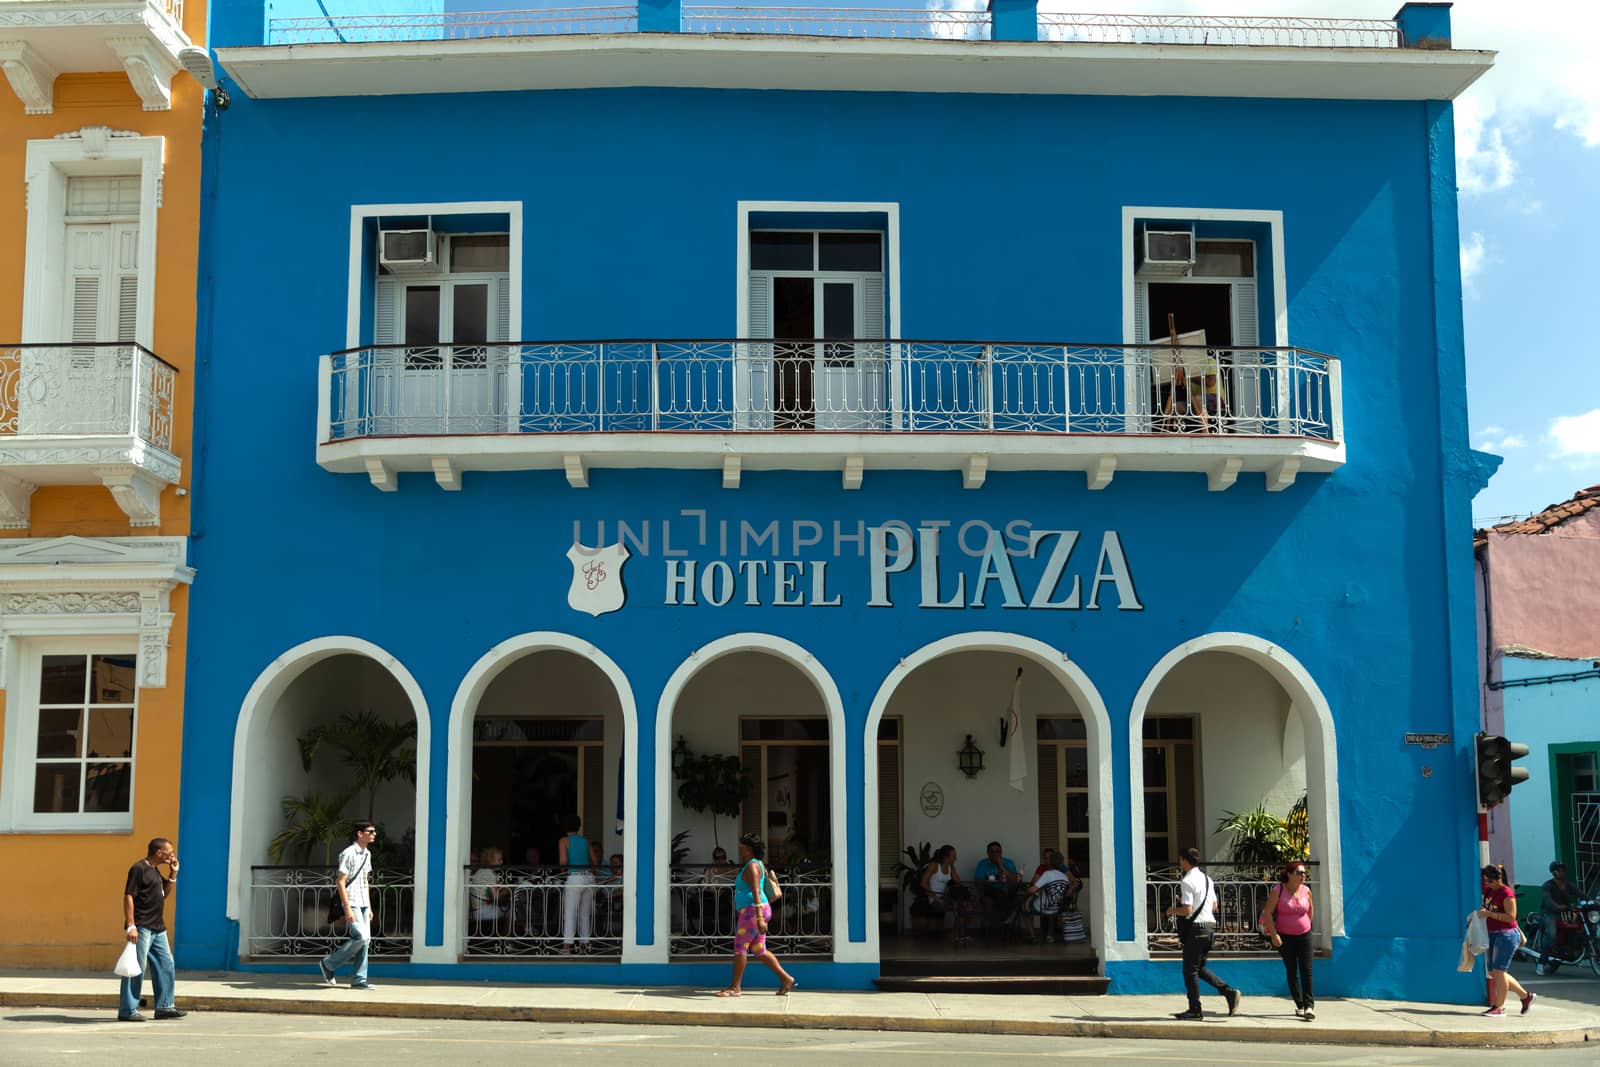 Hotel plaza near Parque Serafin Sanchez, Sancti Spiritus, Cuba by vlad-m